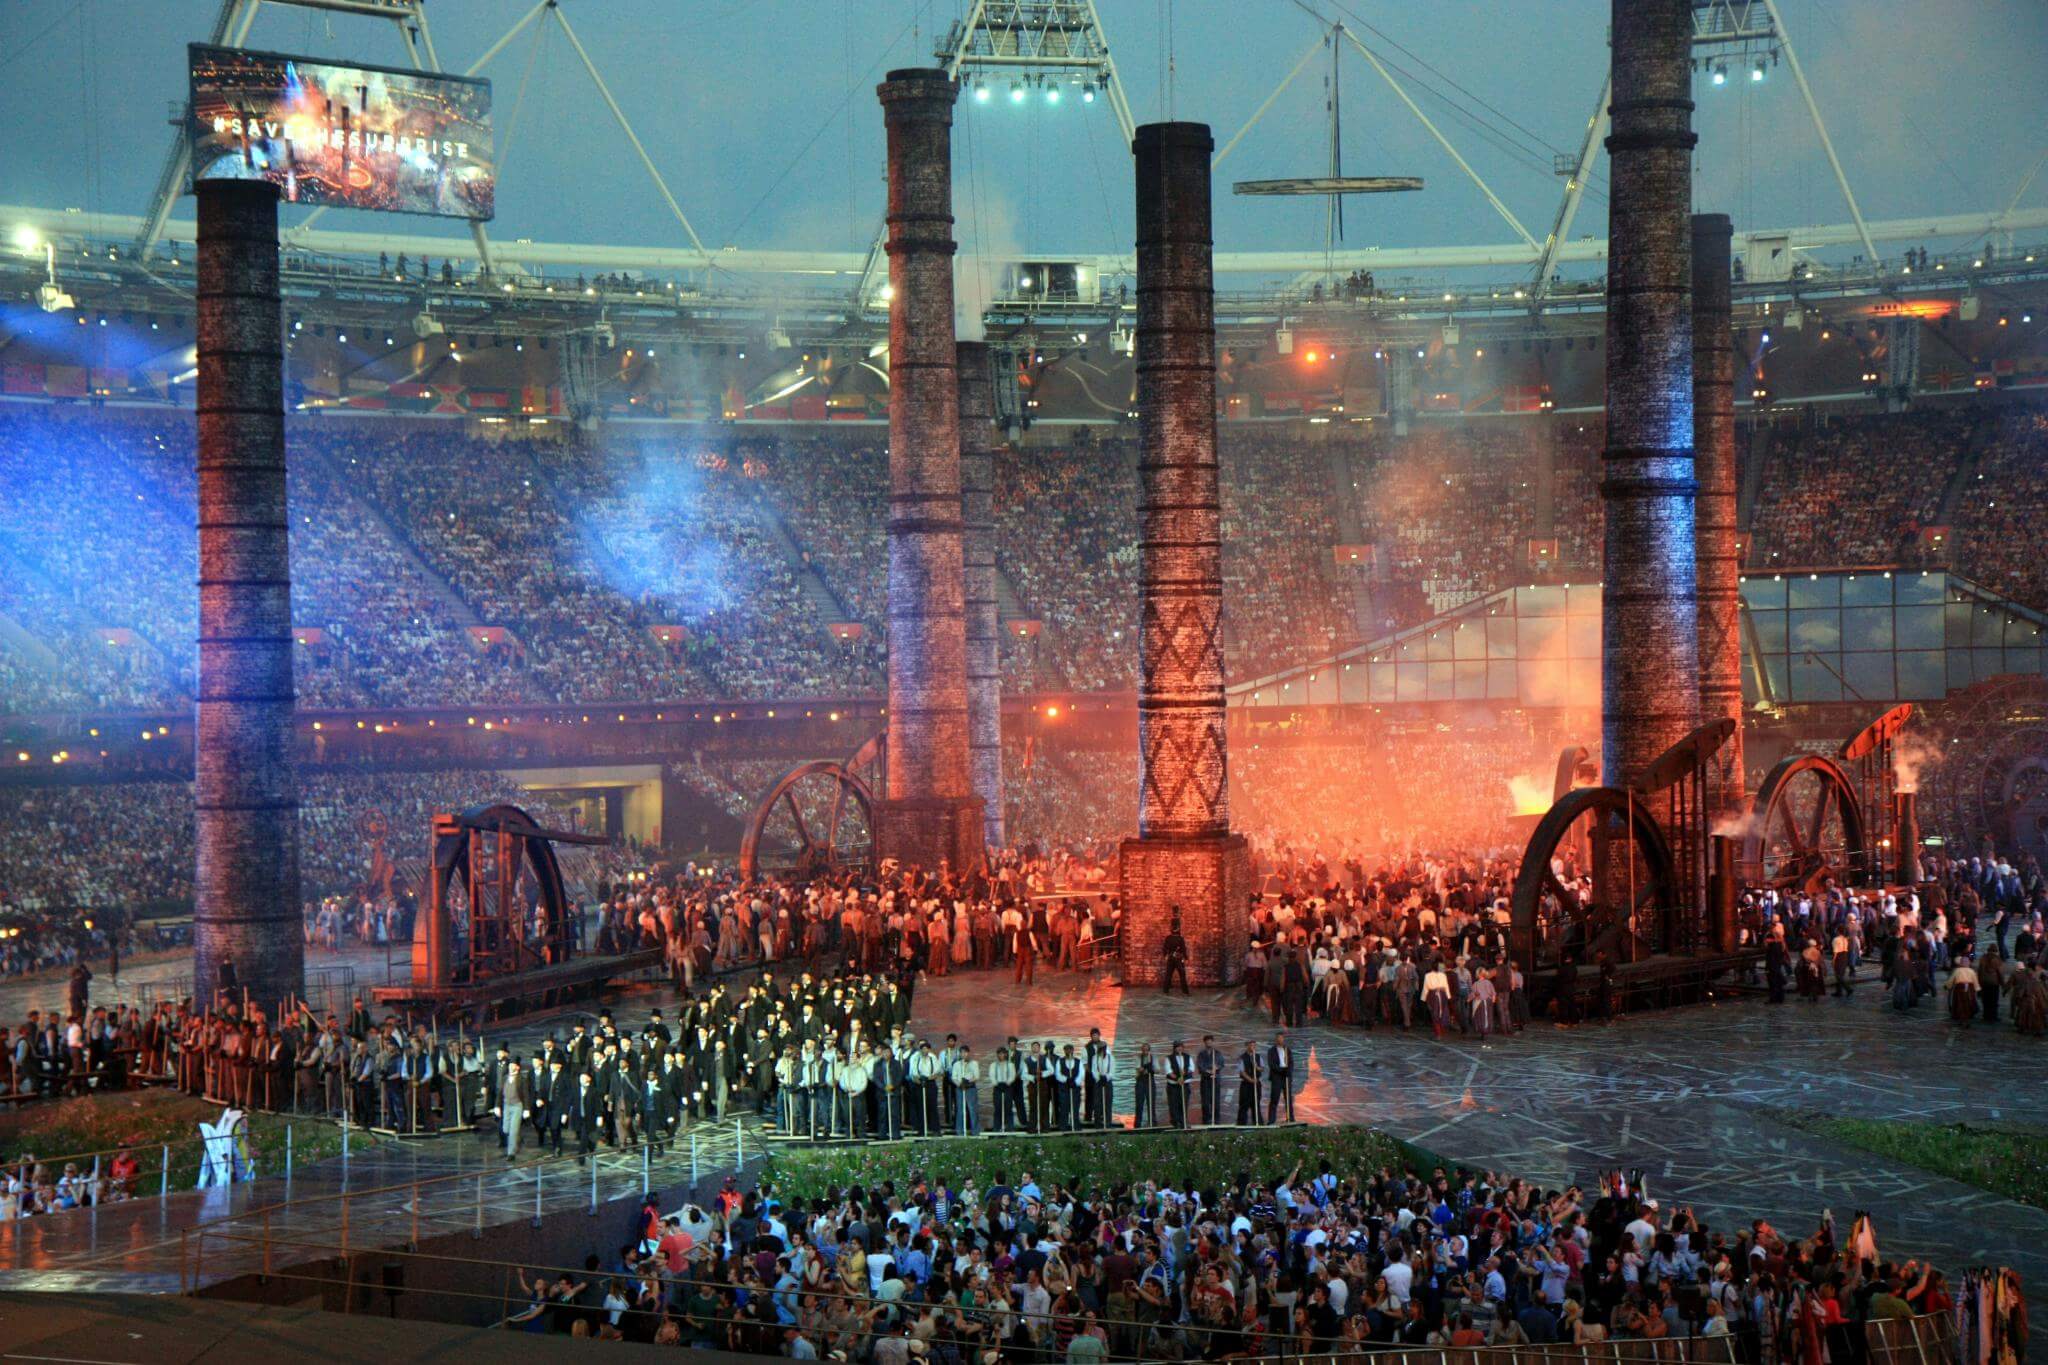 DeWit-2012 Olympics opening ceremony, Industrial Revolution scene-BarneyMoss-WikimediaCommons